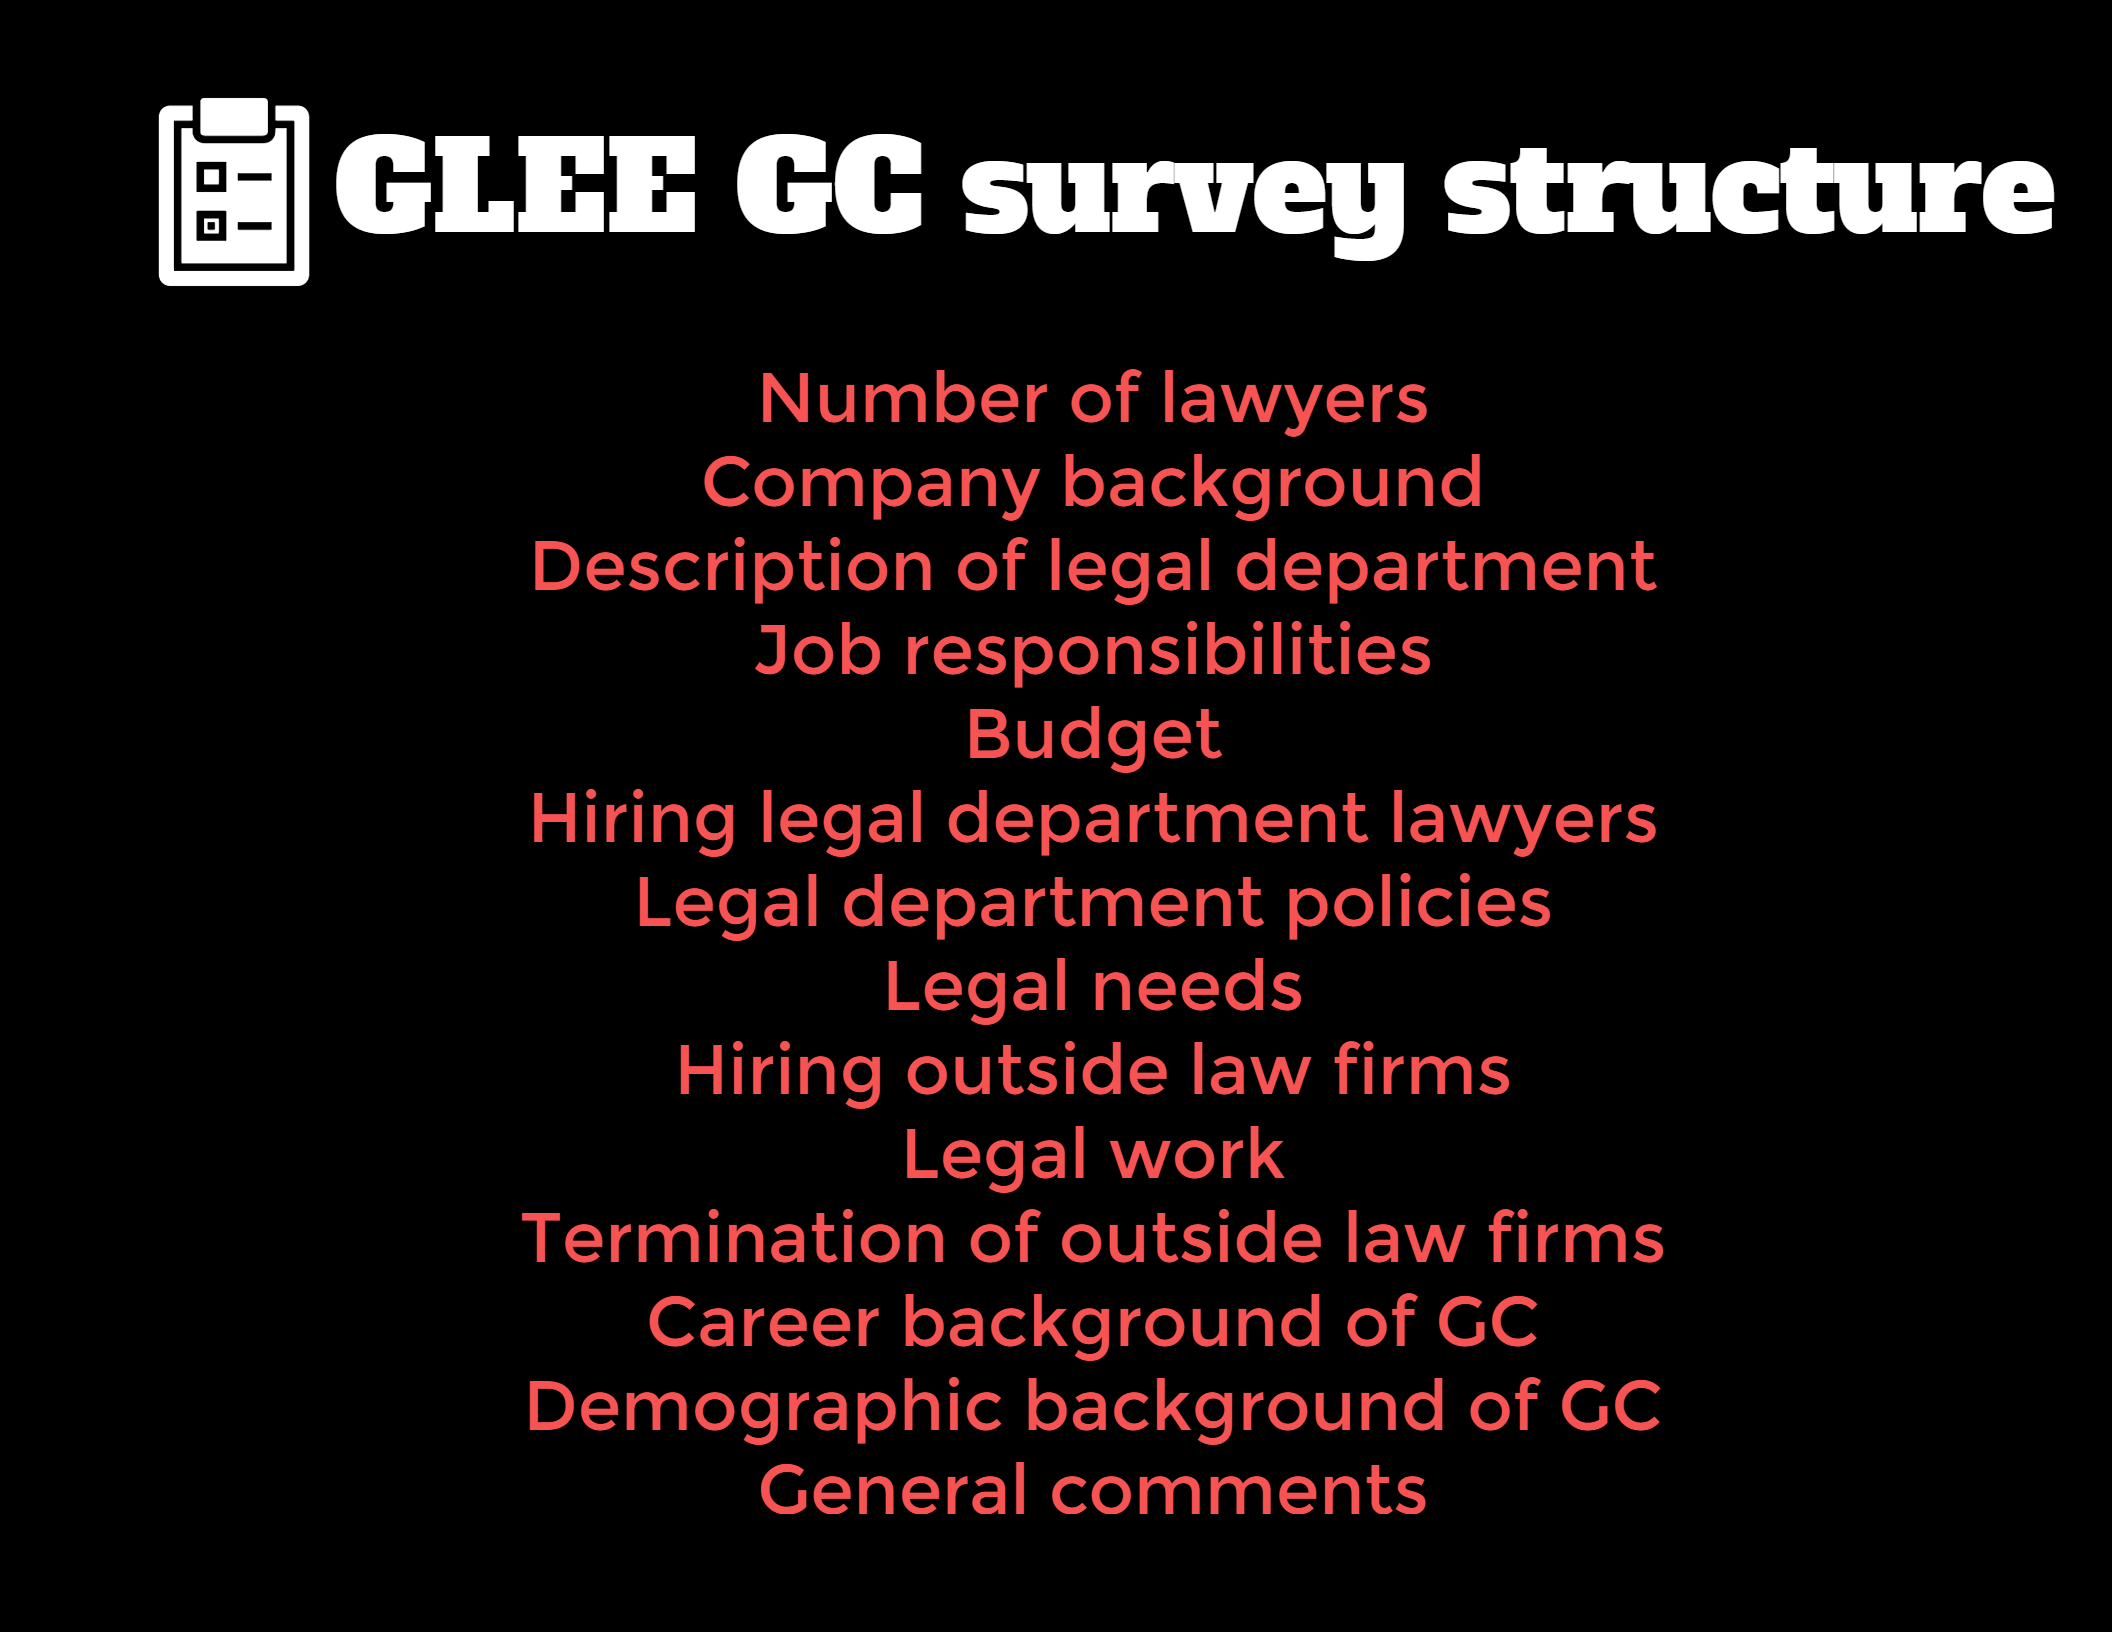 GLEE GC survey structure. 